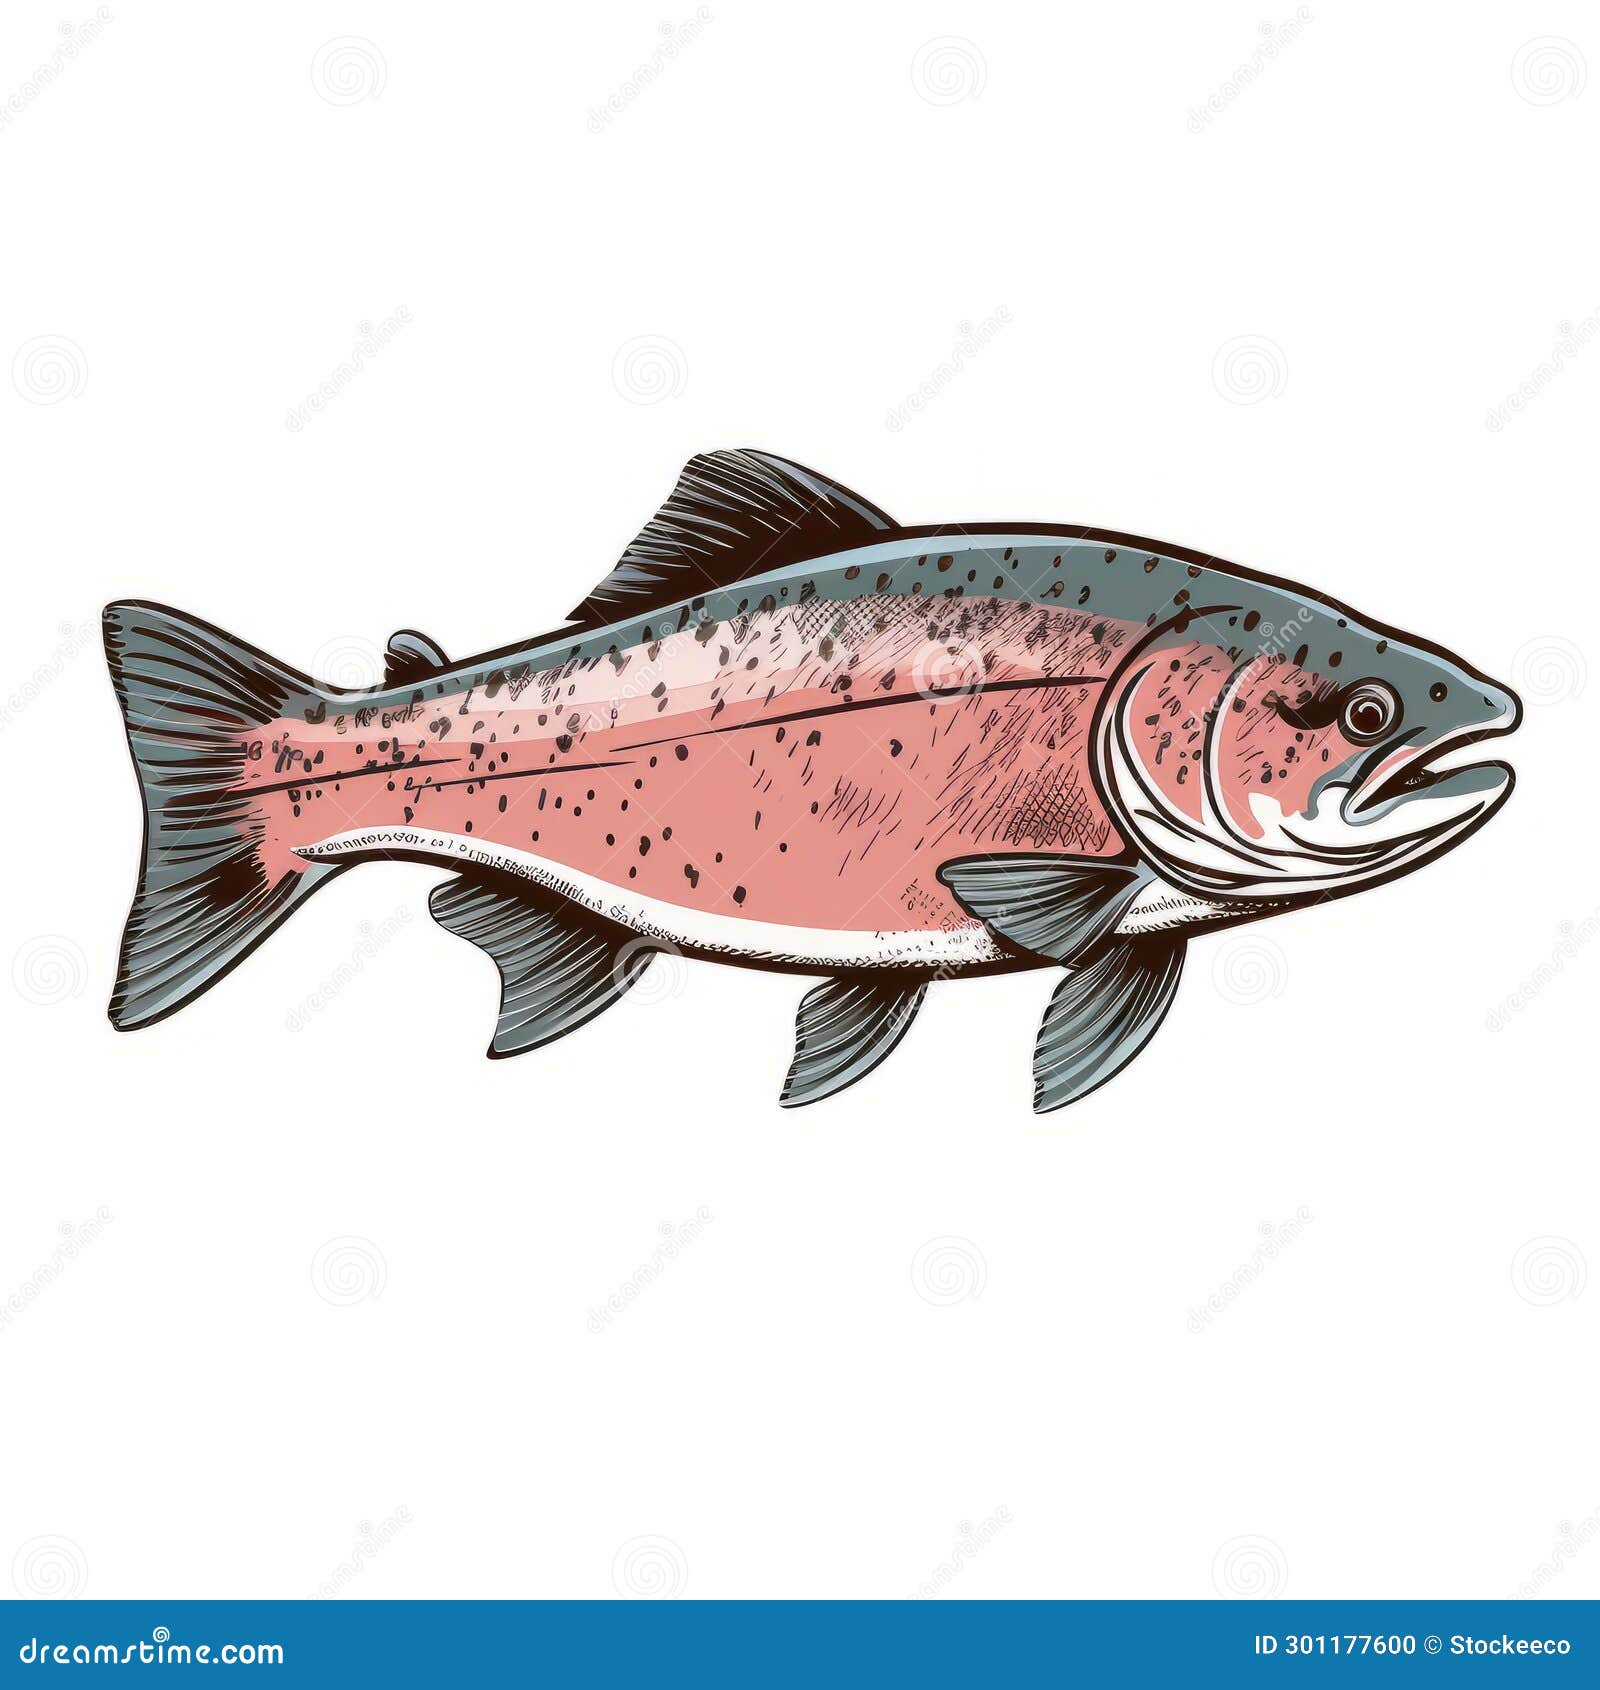 Realistic Rainbow Trout Line Drawing Illustration with Classic Tattoo  Motifs Stock Illustration - Illustration of light, fish: 301177600